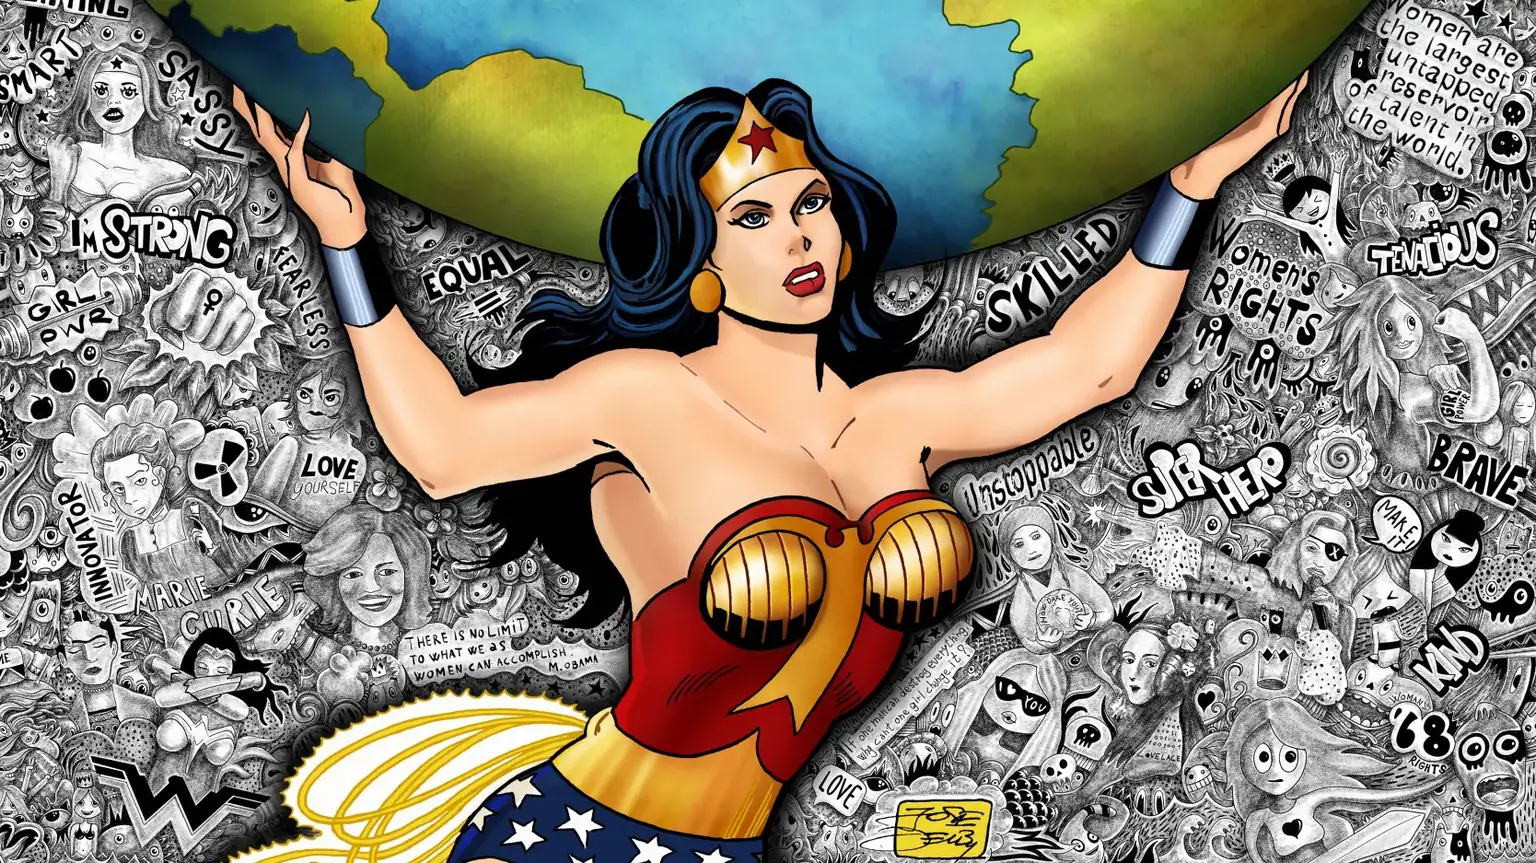 Wonder Woman NFT "Weight of the World" by José Delbo. Image: José Delbo